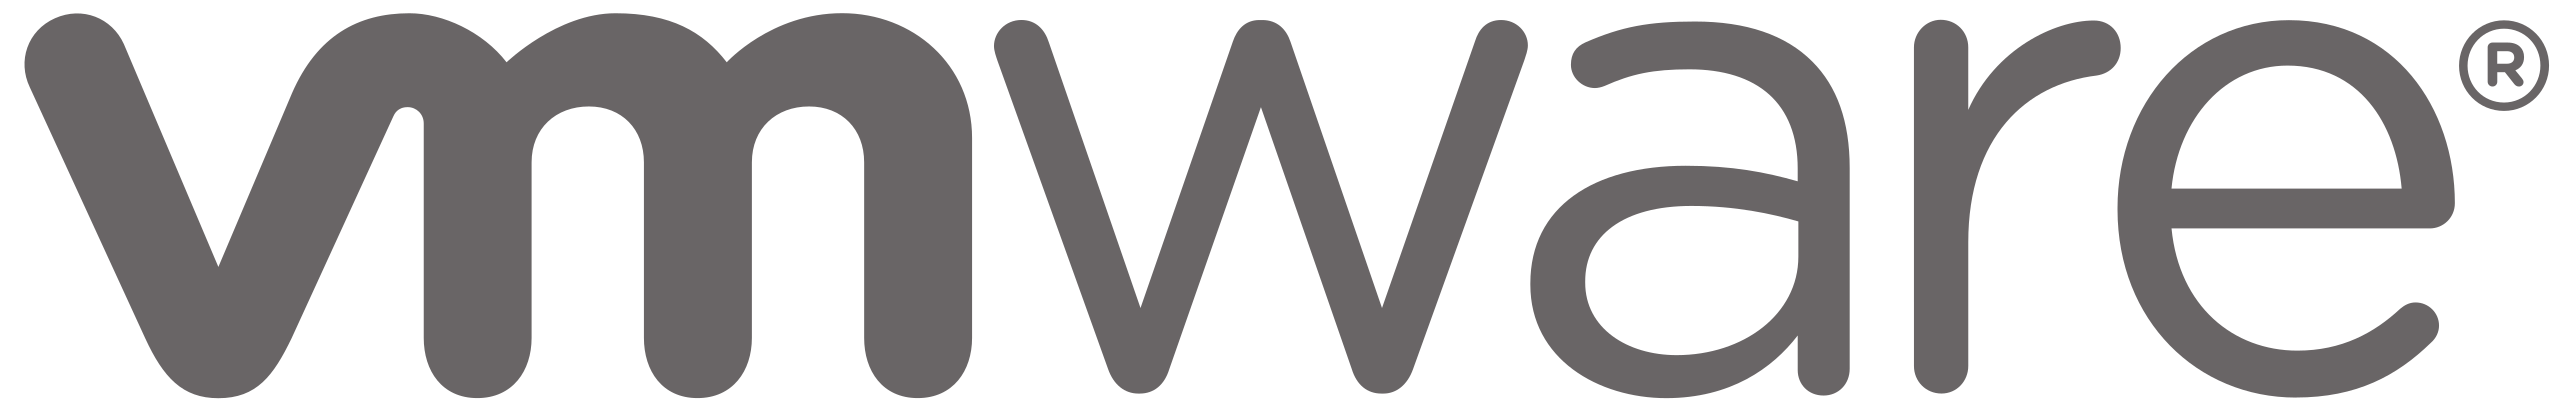 VMware vendor logo